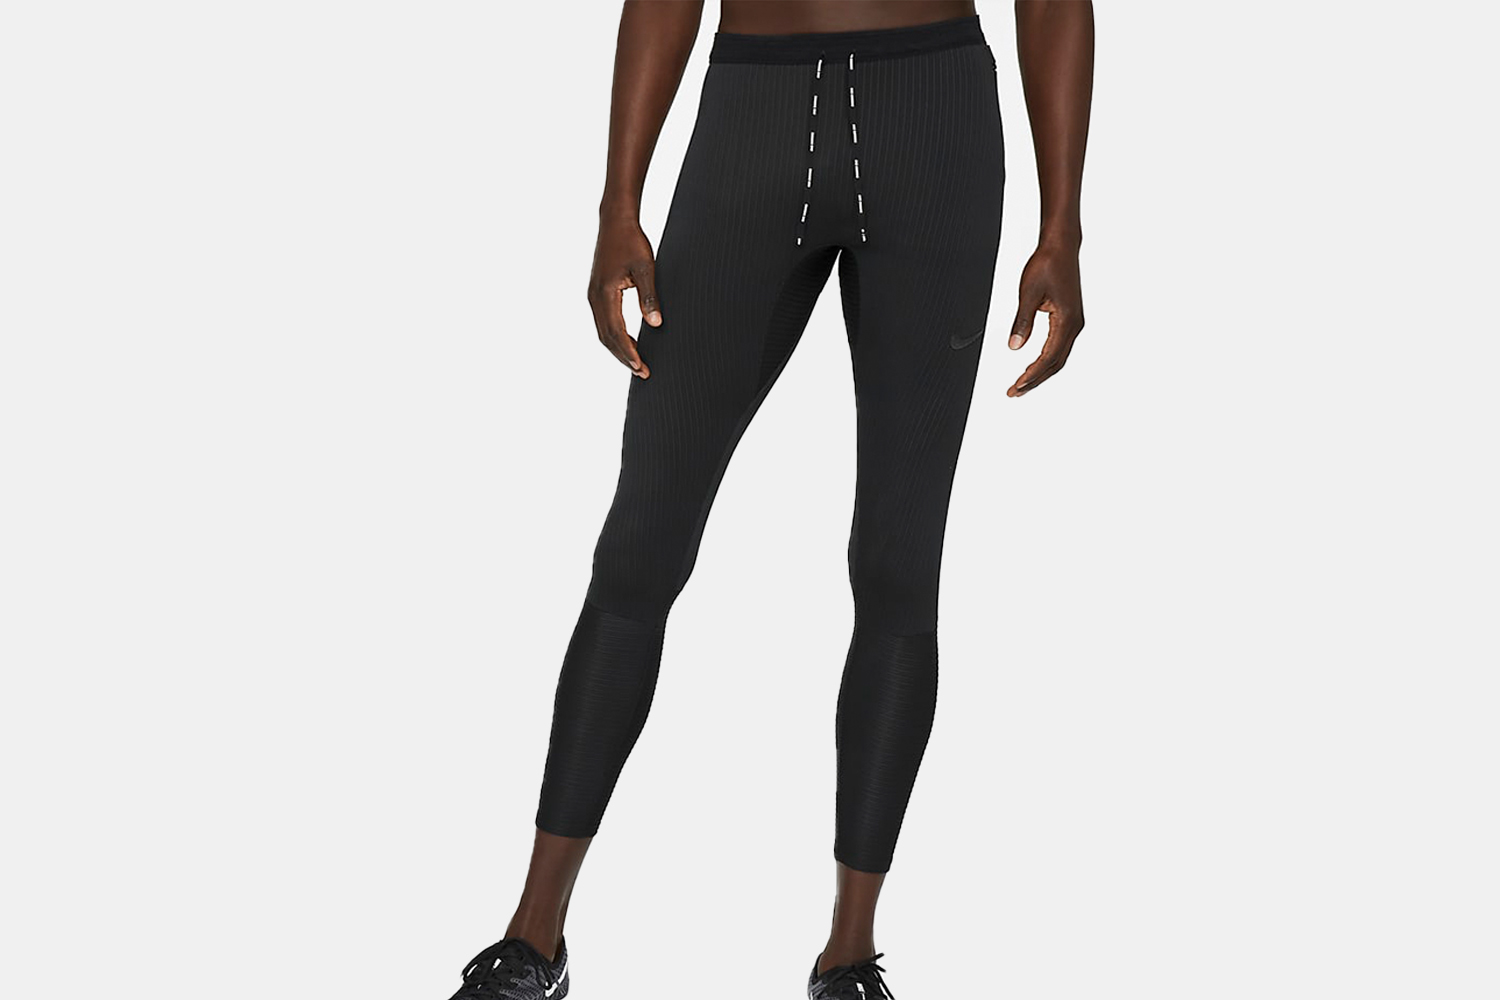 black nike tights on a model